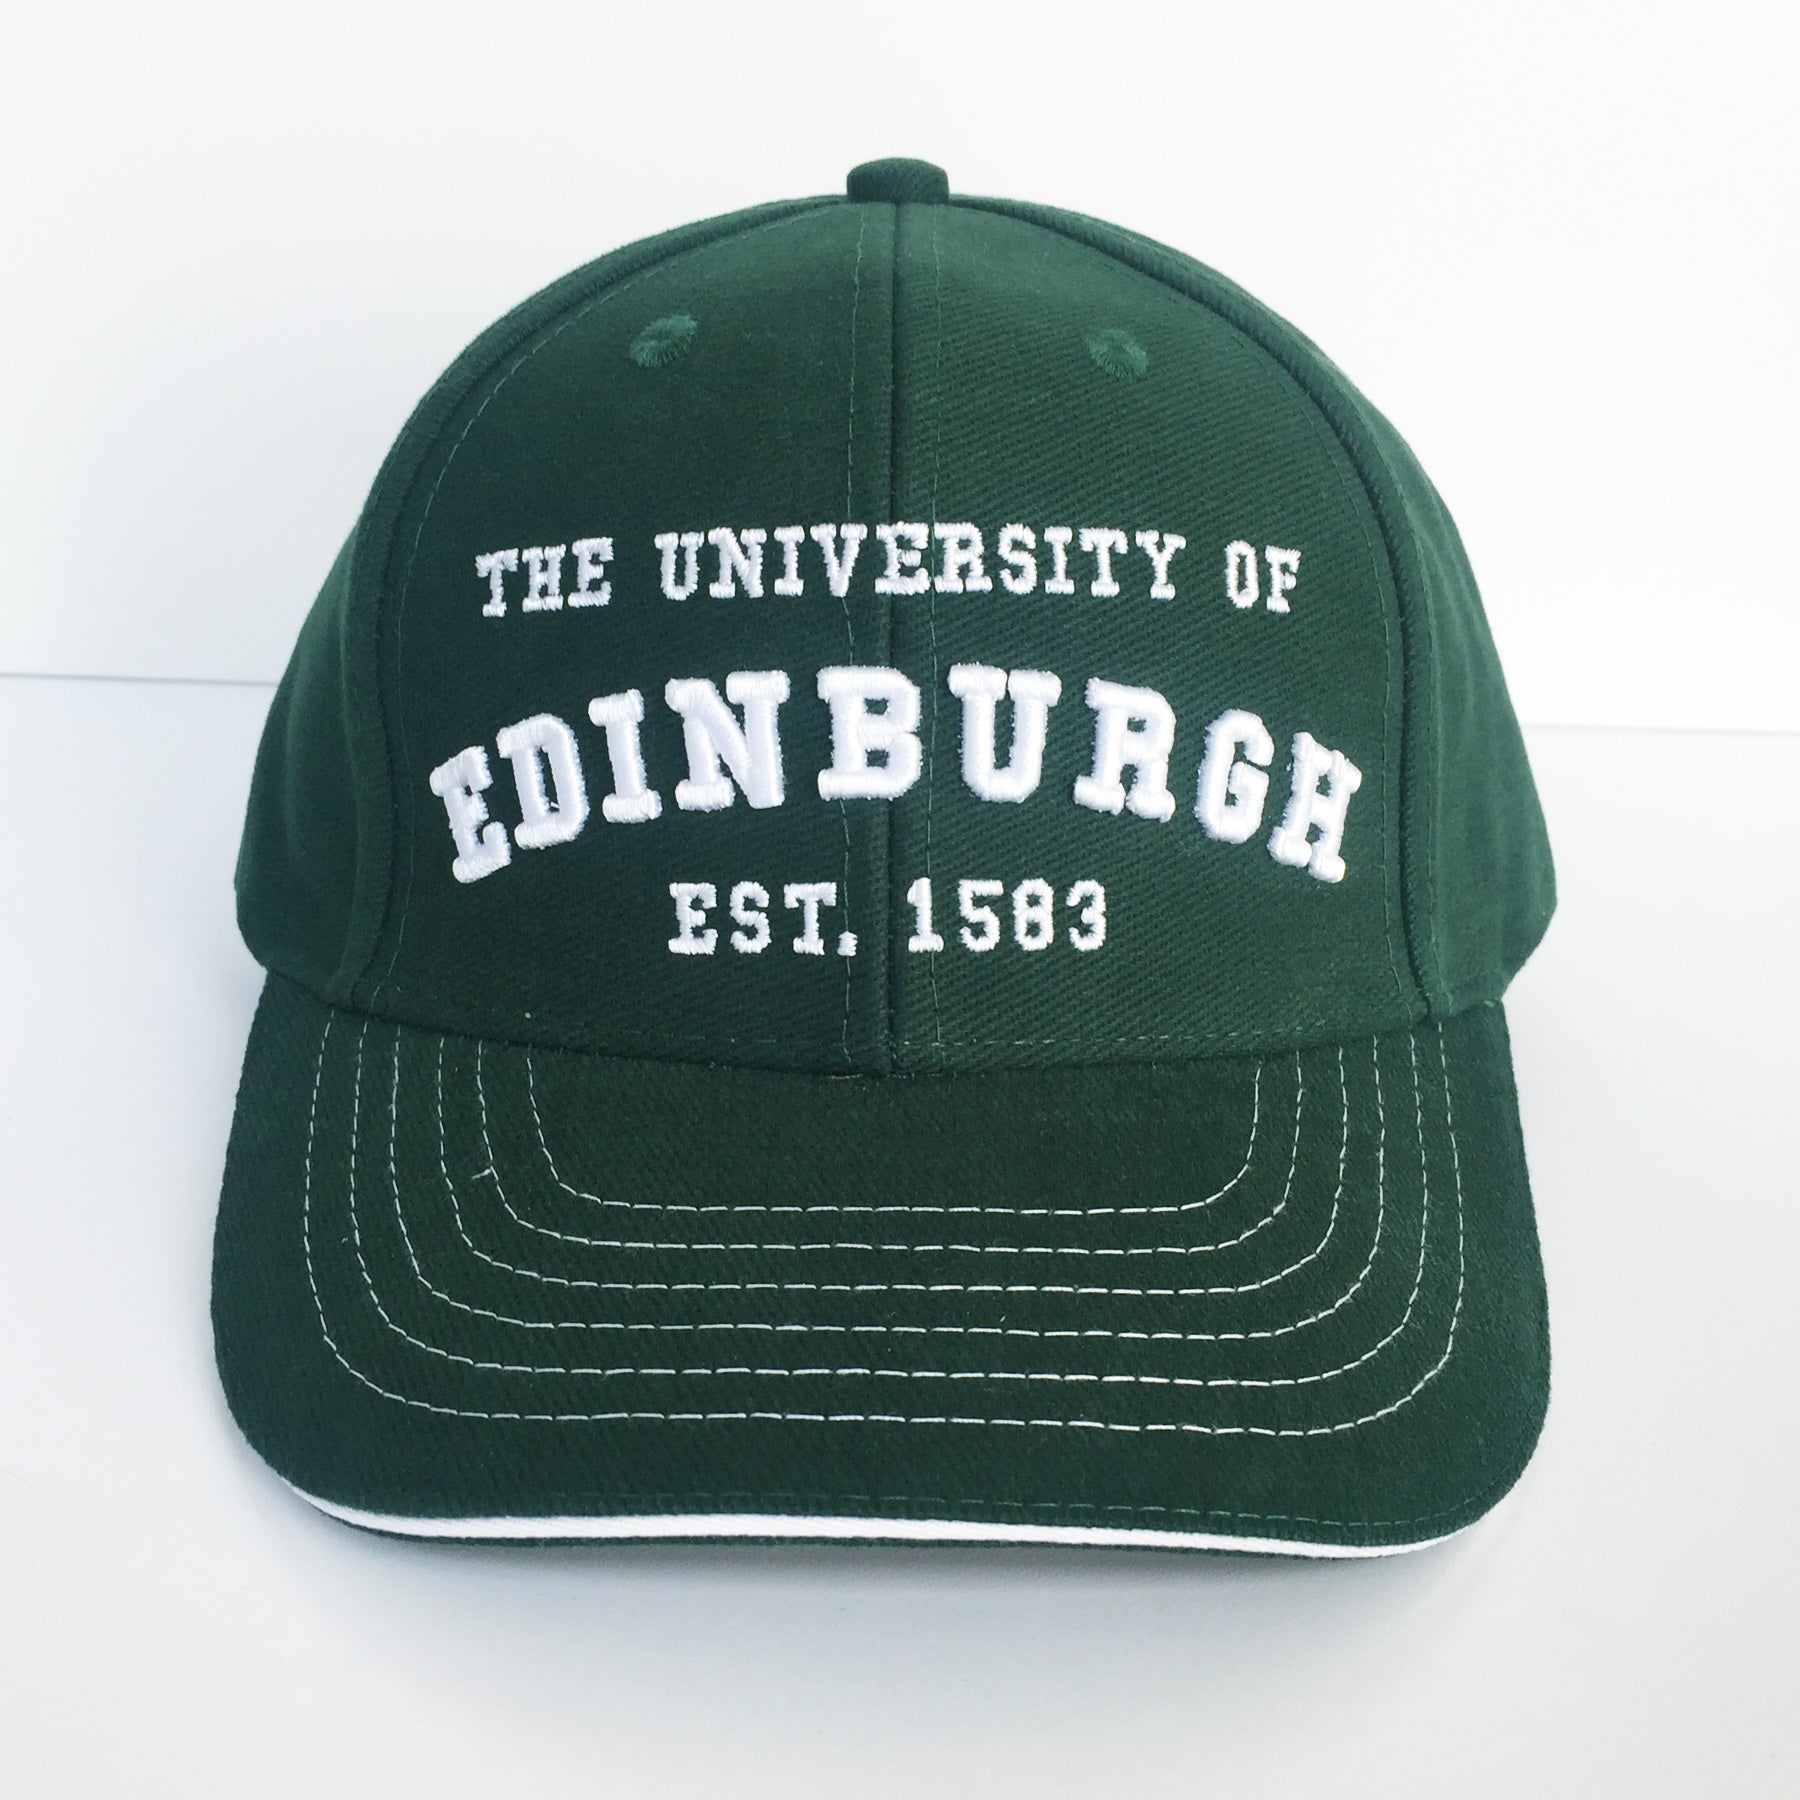 Green embroidered cap with Edinburgh University branding that reads:'The University of Edinburgh Est.1583' in white. 